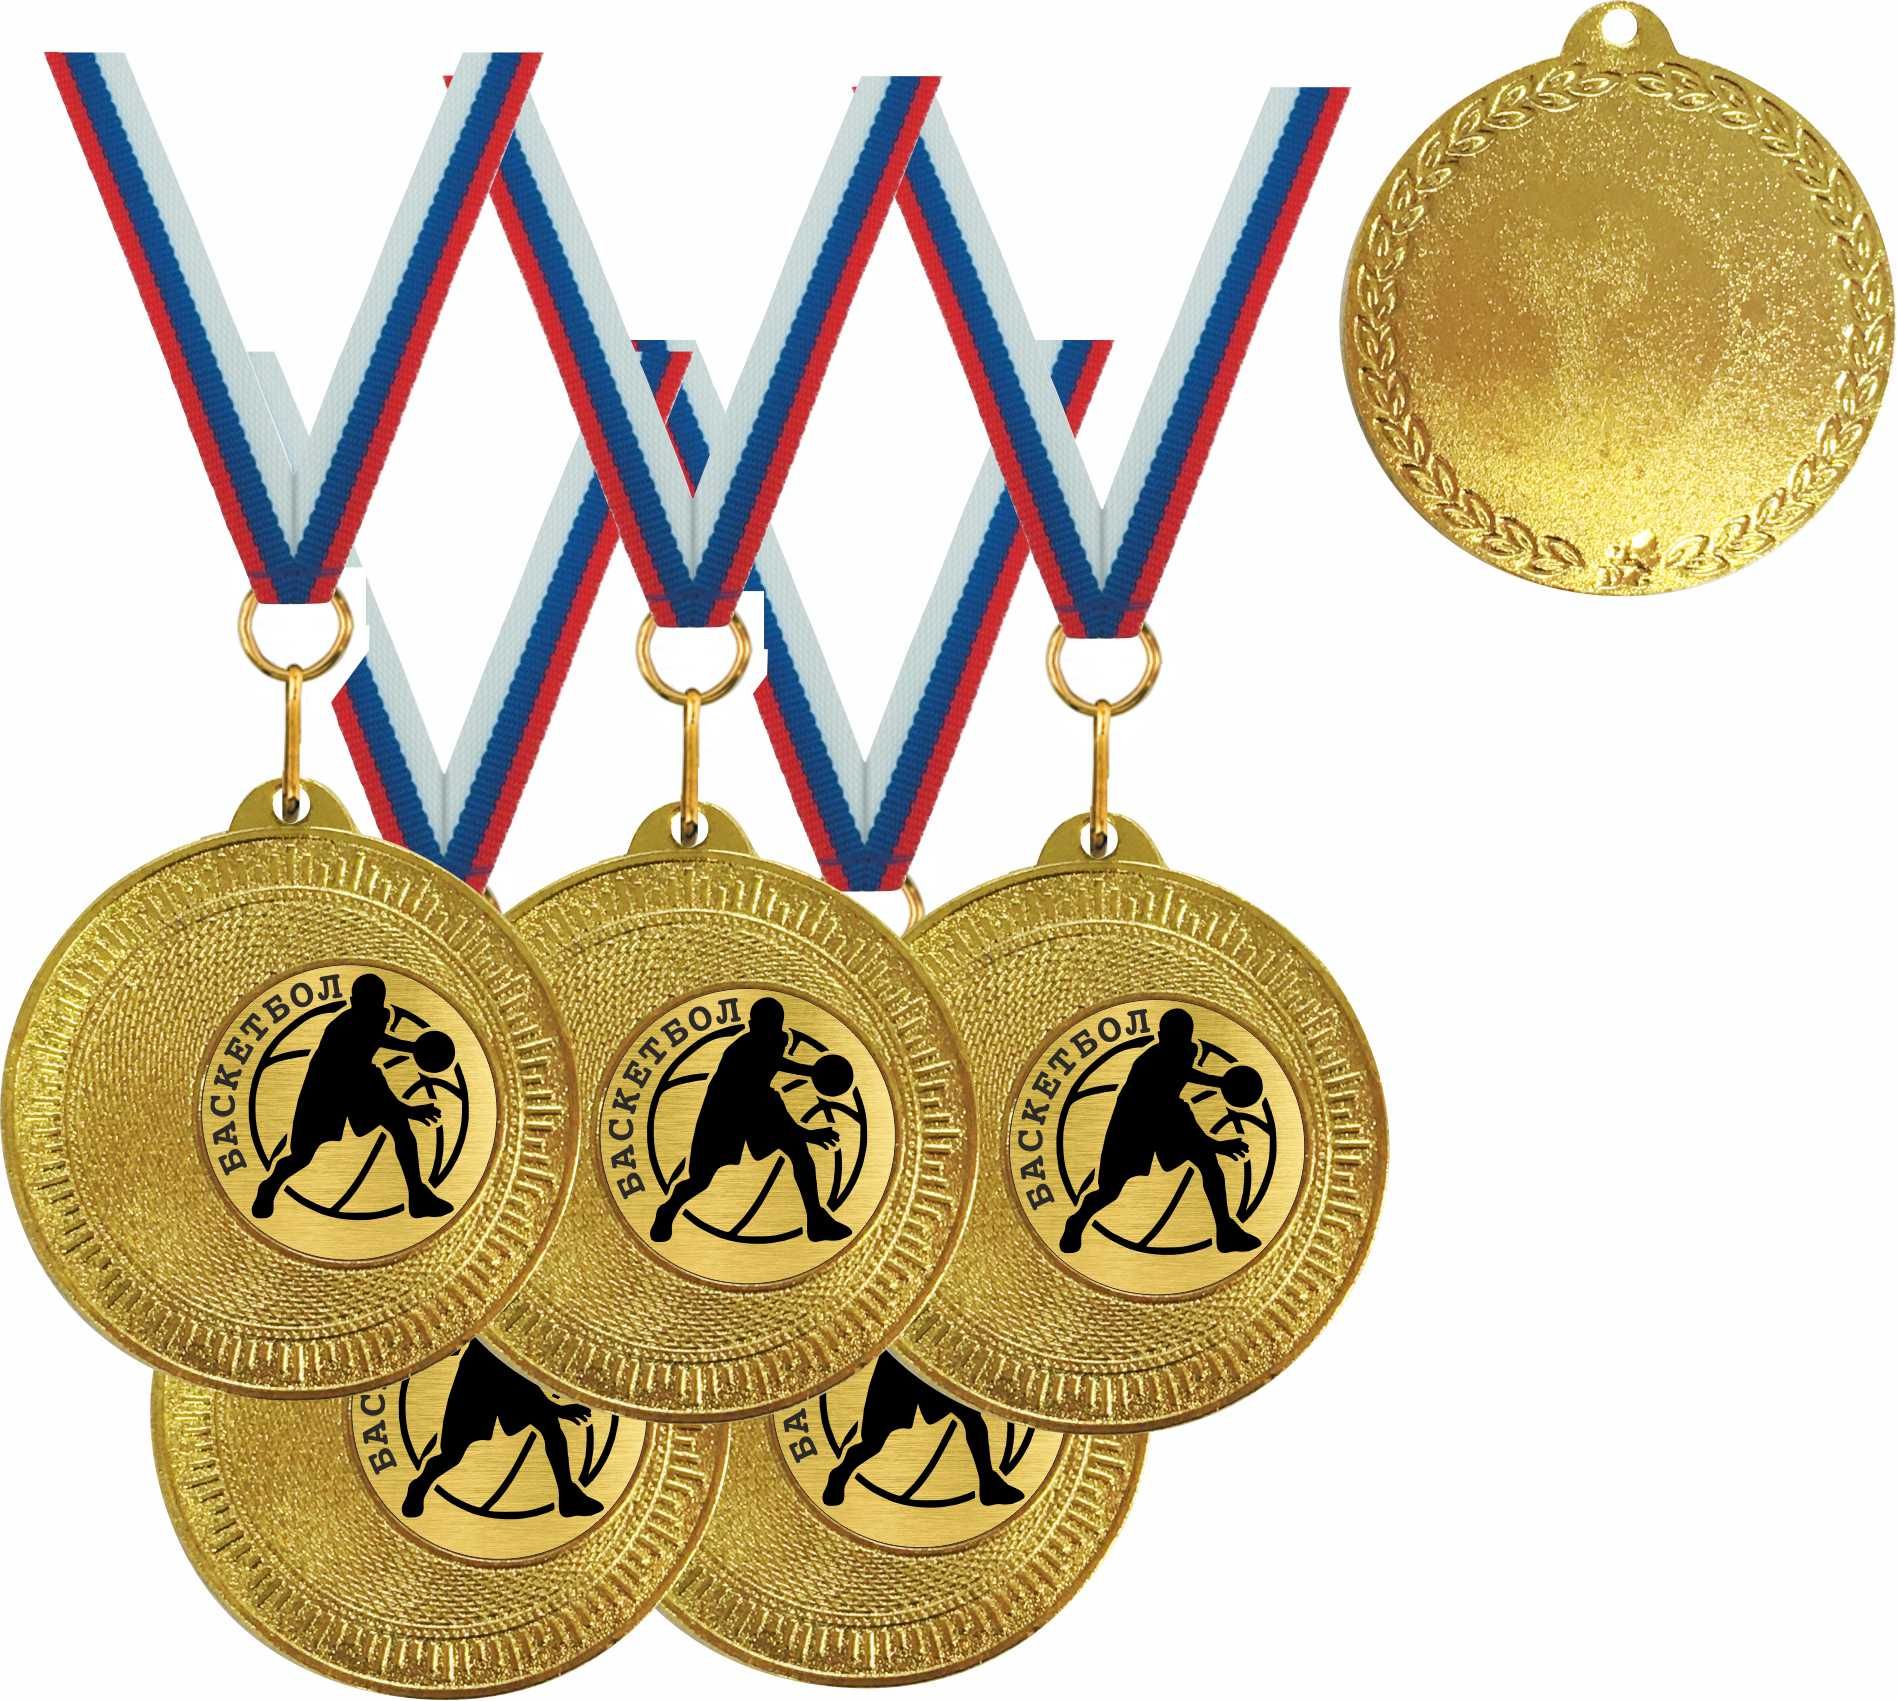 Sports medals. Медали спортивные. Медаль спорт. Медали для детей в детском саду спортивные. Медаль за спортивные достижения.